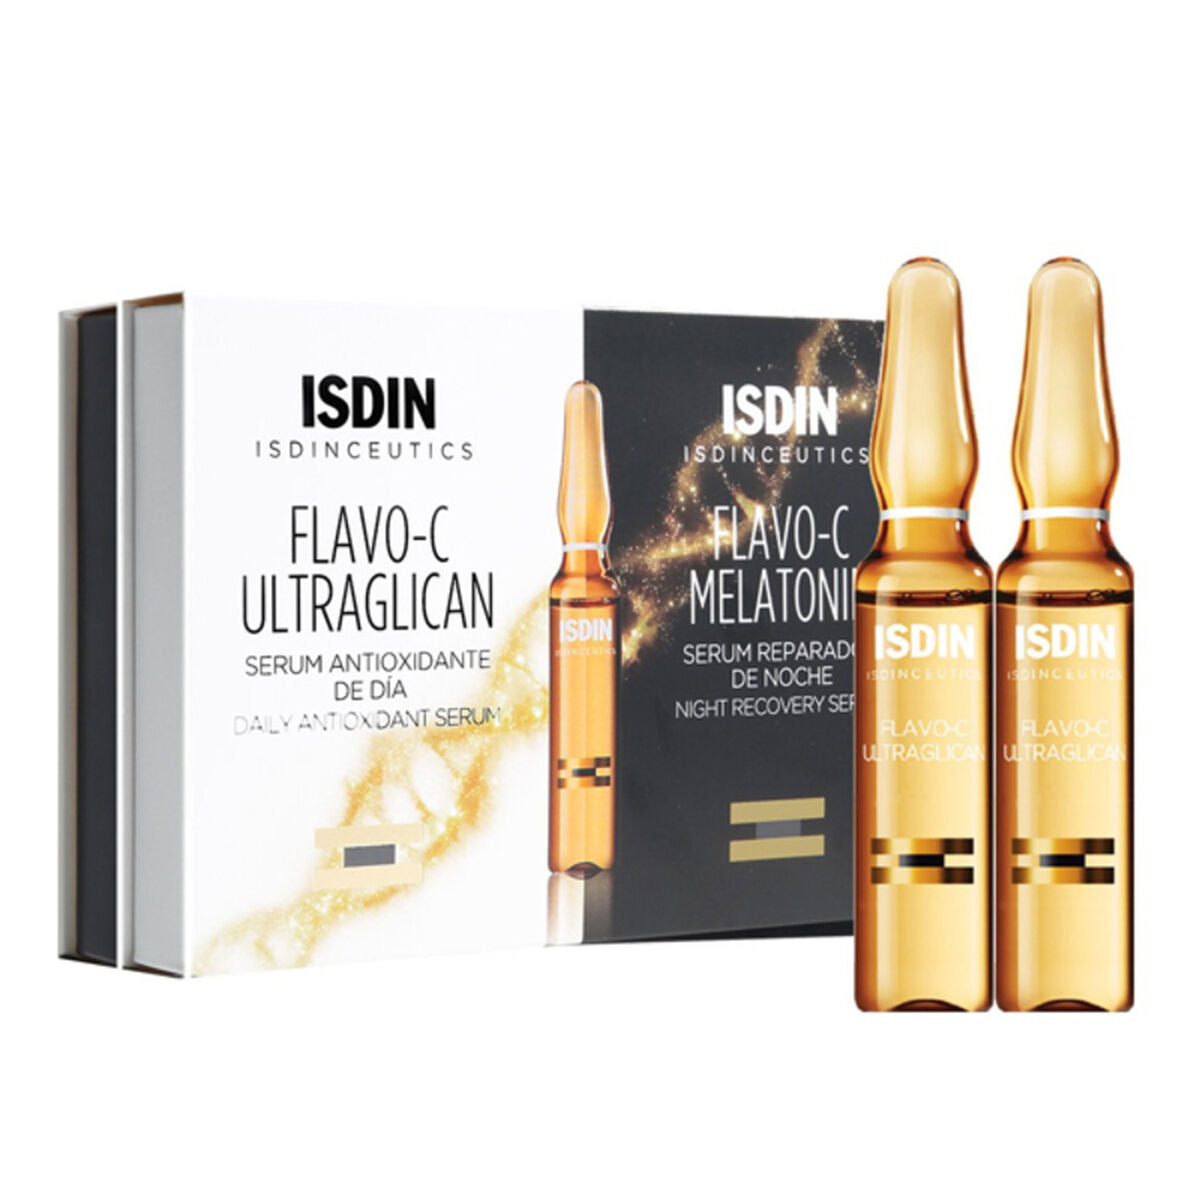 Antioxidant Serum Isdin Isdinceutics Melatonin + Ultraglican 20 x 2 ml Ampoules